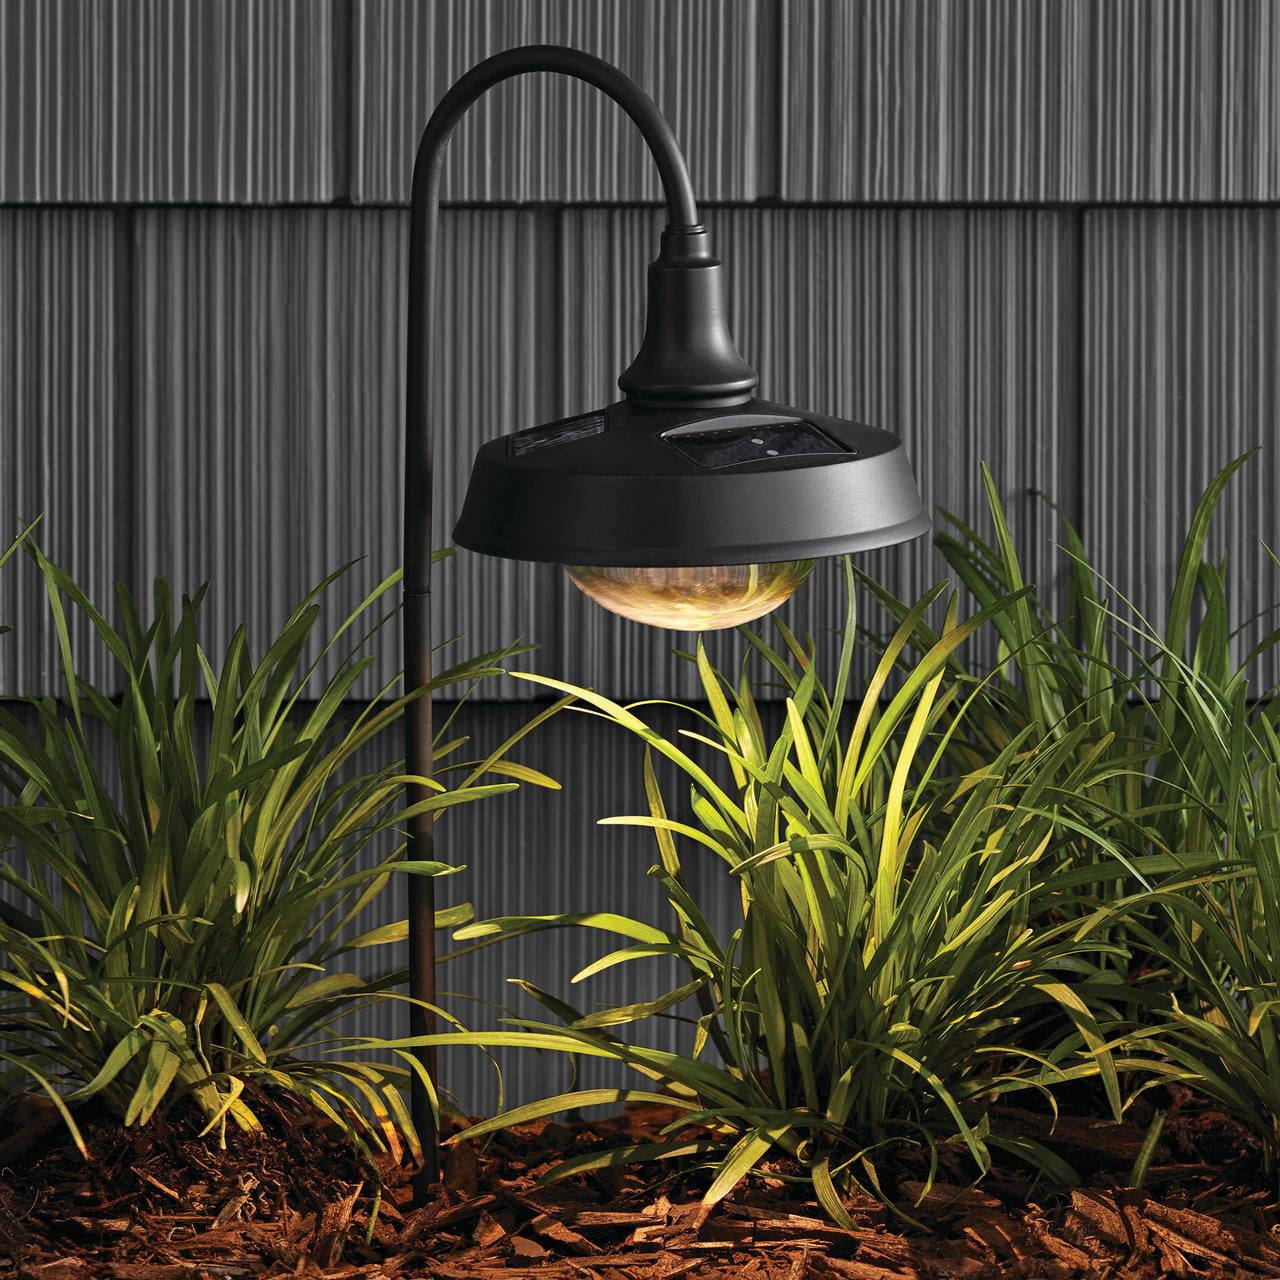 Better Homes & Gardens Matte Black Metal Solar Powered LED Landscape Walkway Light, 20 Lumens